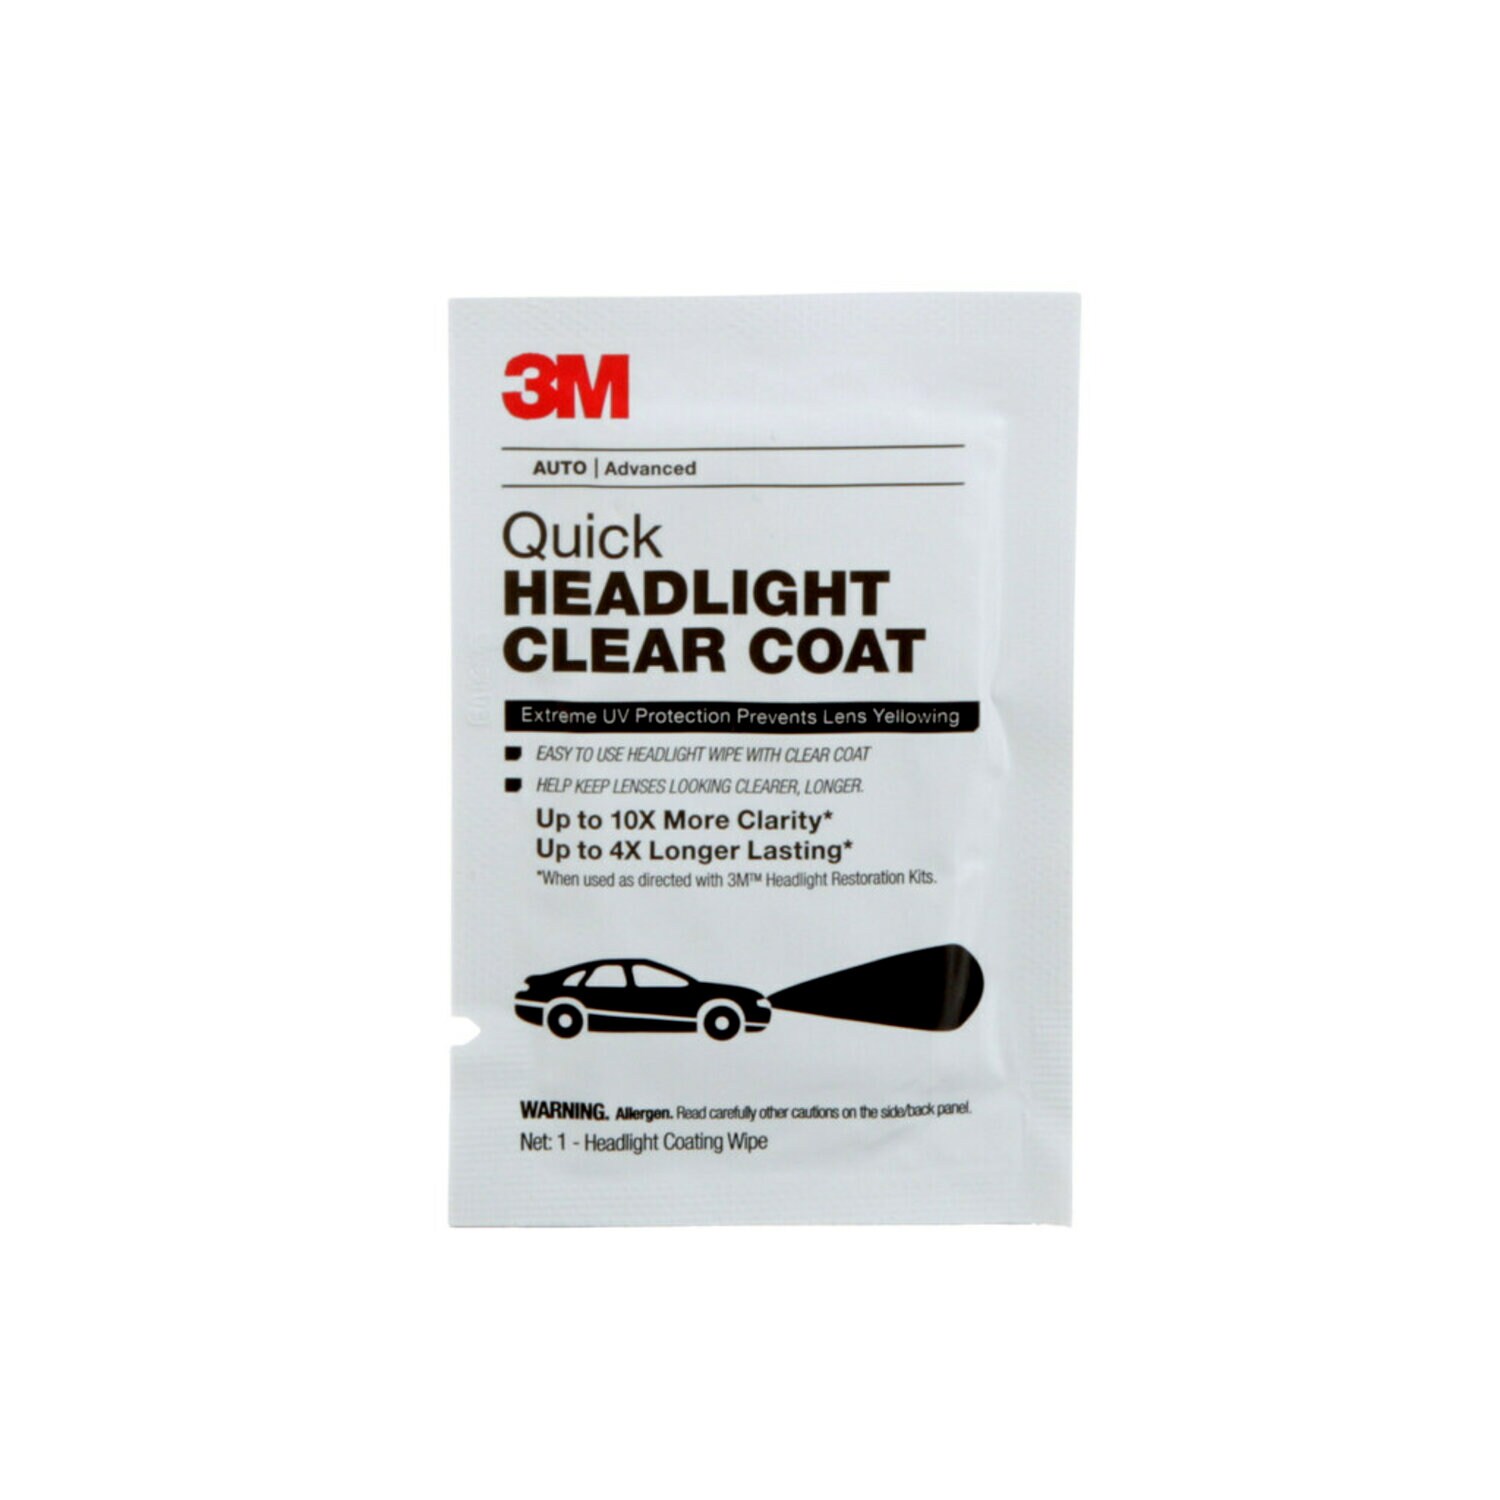 7100127233 - 3M Quick Headlight Clear Coat Wipes, 32516, 40 wipes per case